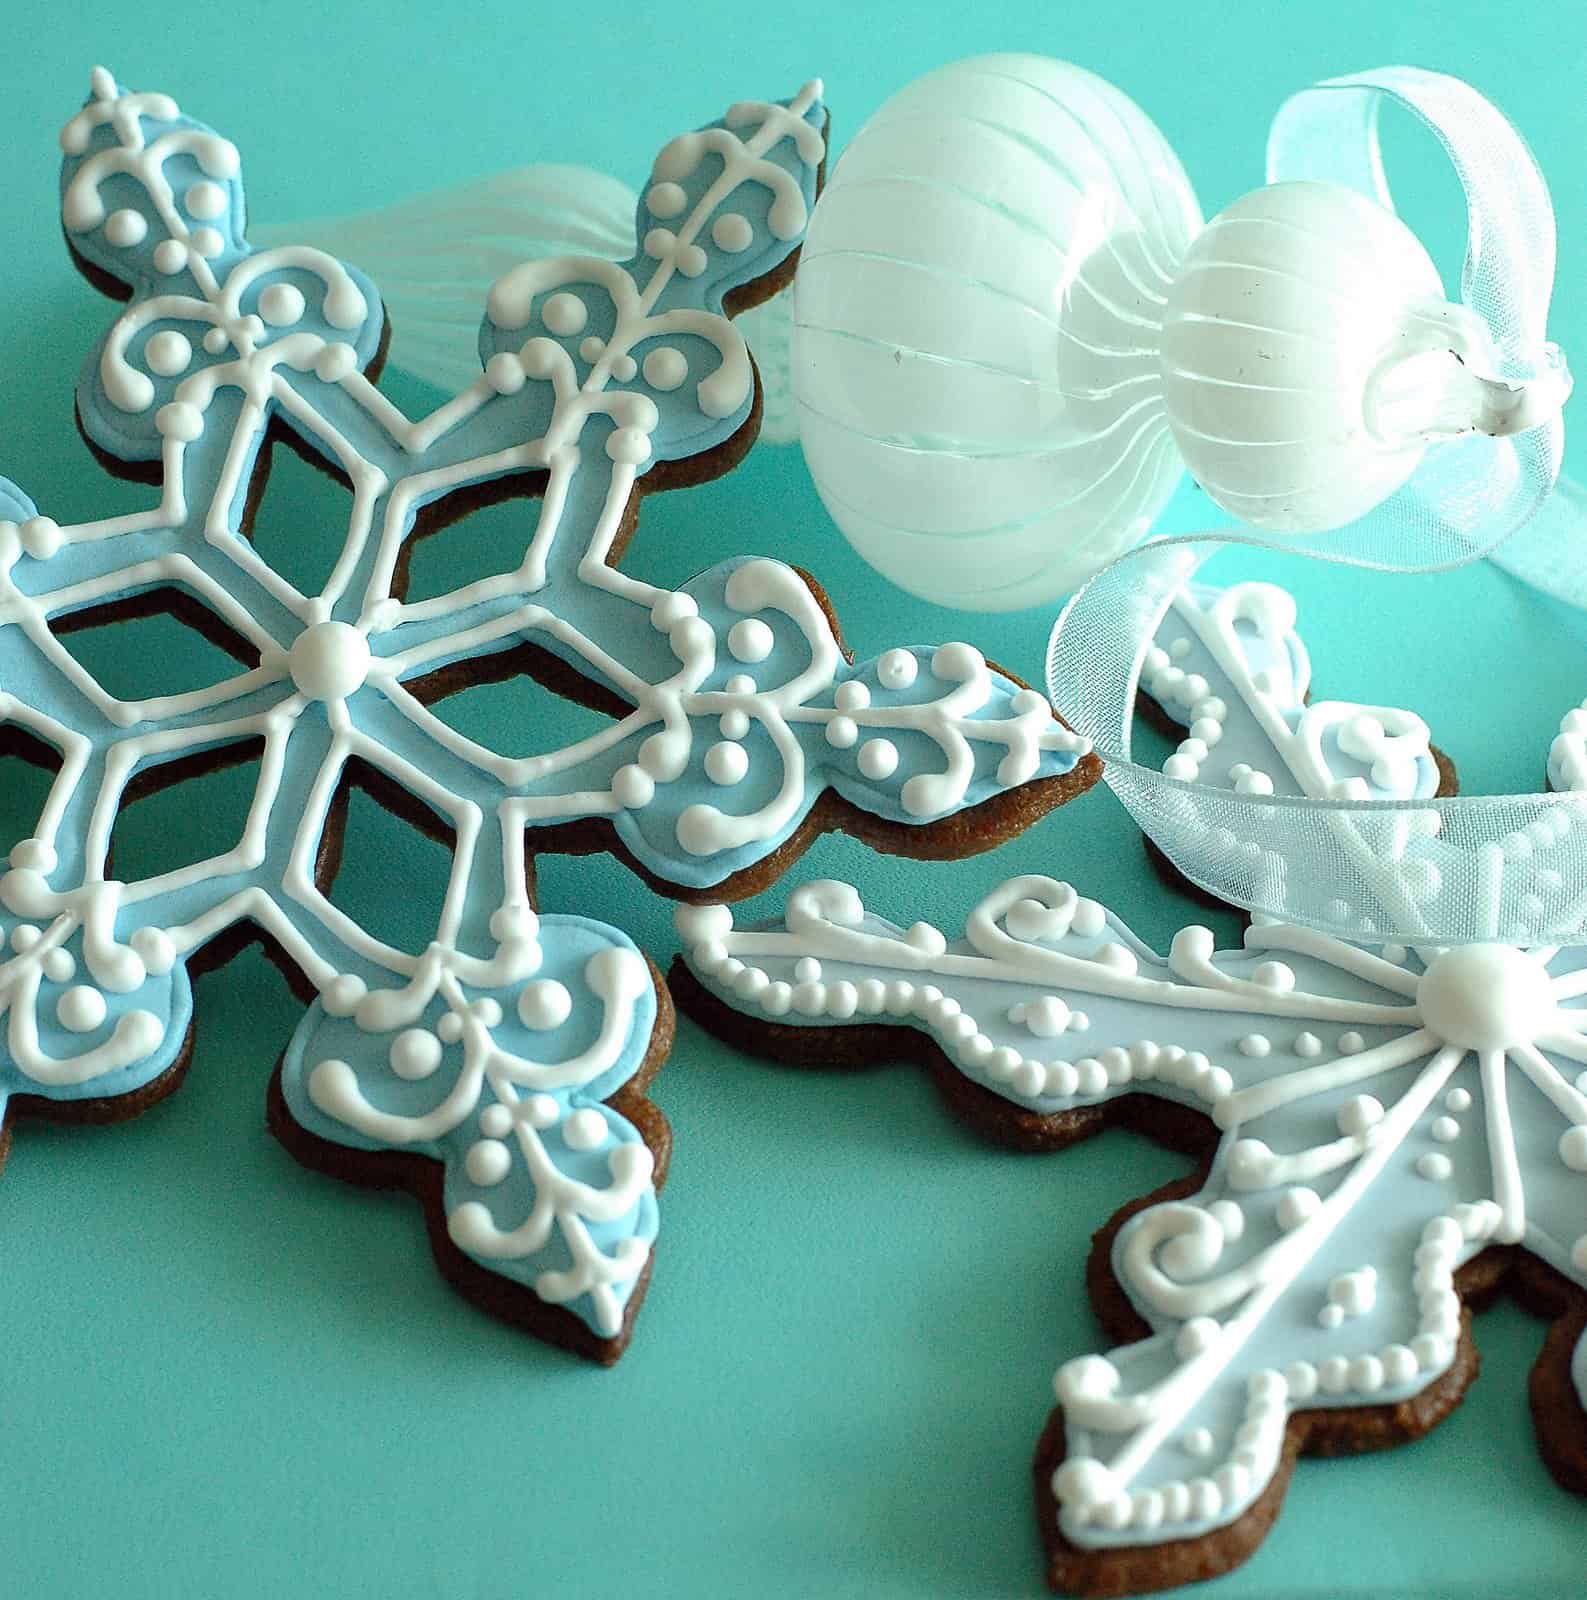 Snowflake Cookies Insane Baking Creations